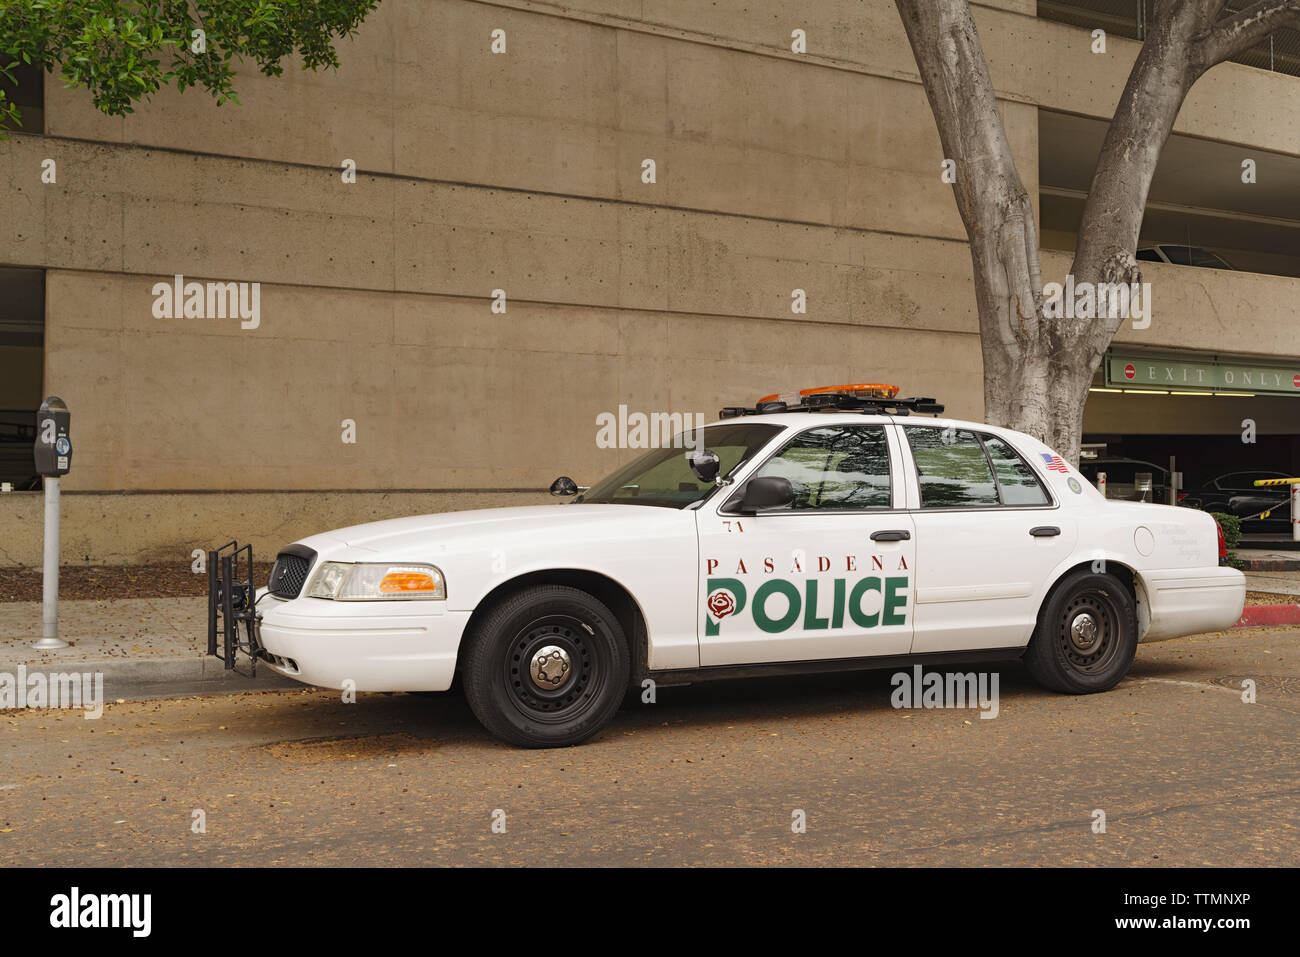 Pasadena Police vehicle parked in the City of Pasadena, California. Stock Photo